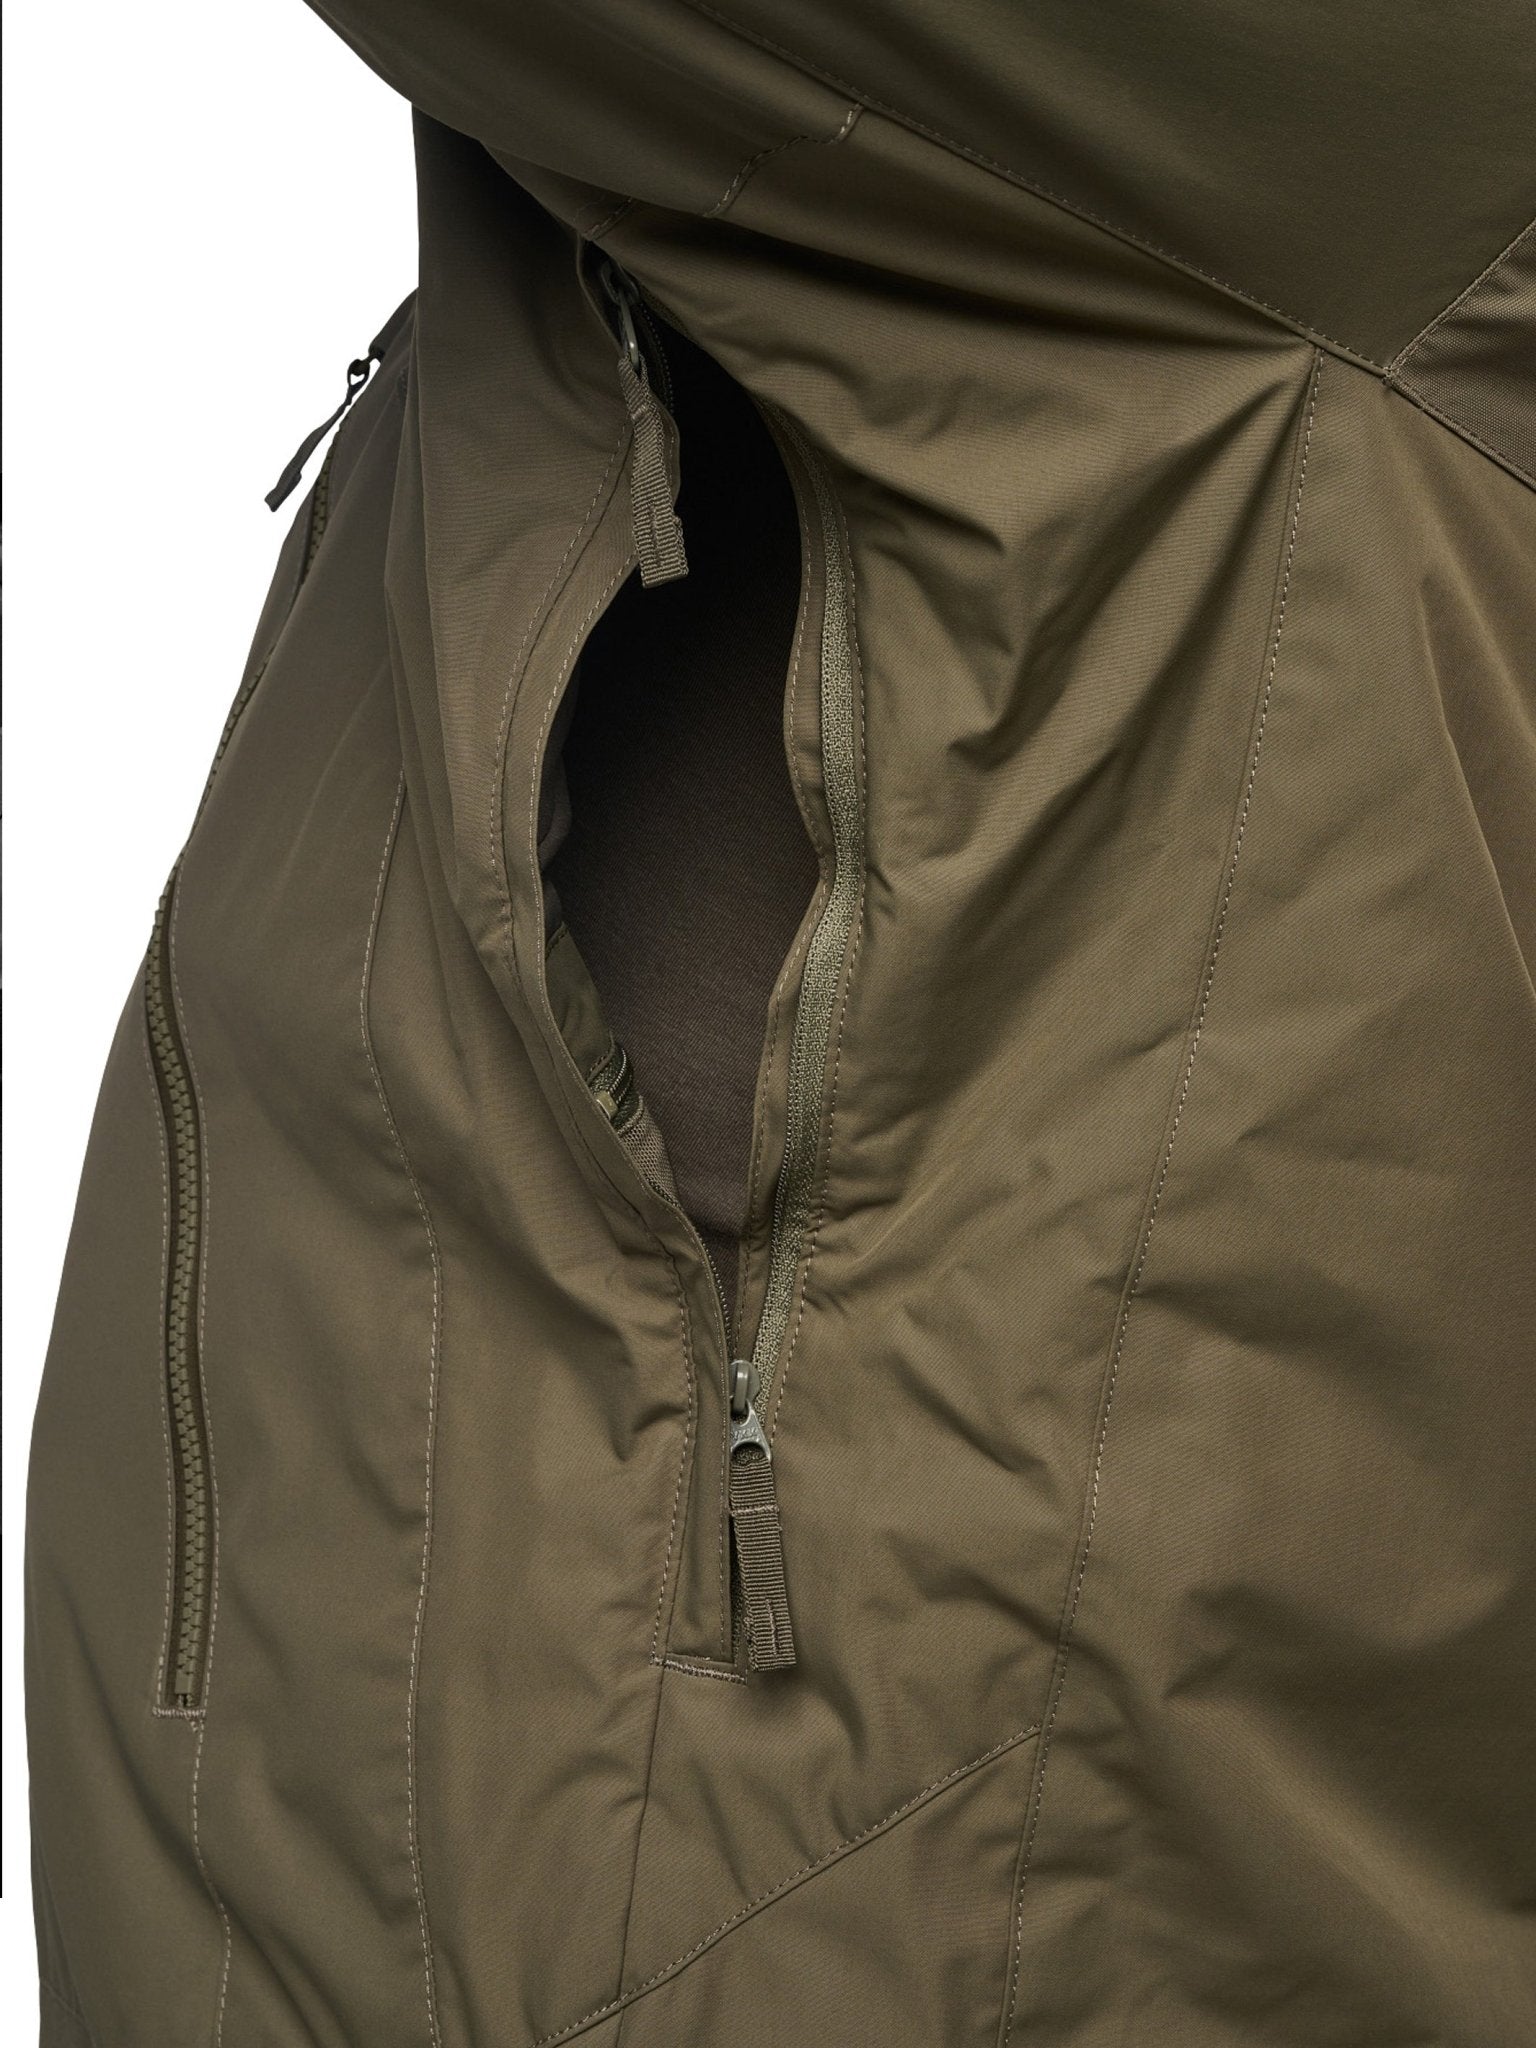 4elementsclothing5.11 Tactical5.11 Tactical - Waterproof & Breathable Bastion Jacket - With Primaloft DWR coatedCoats & Jackets48374-019-S